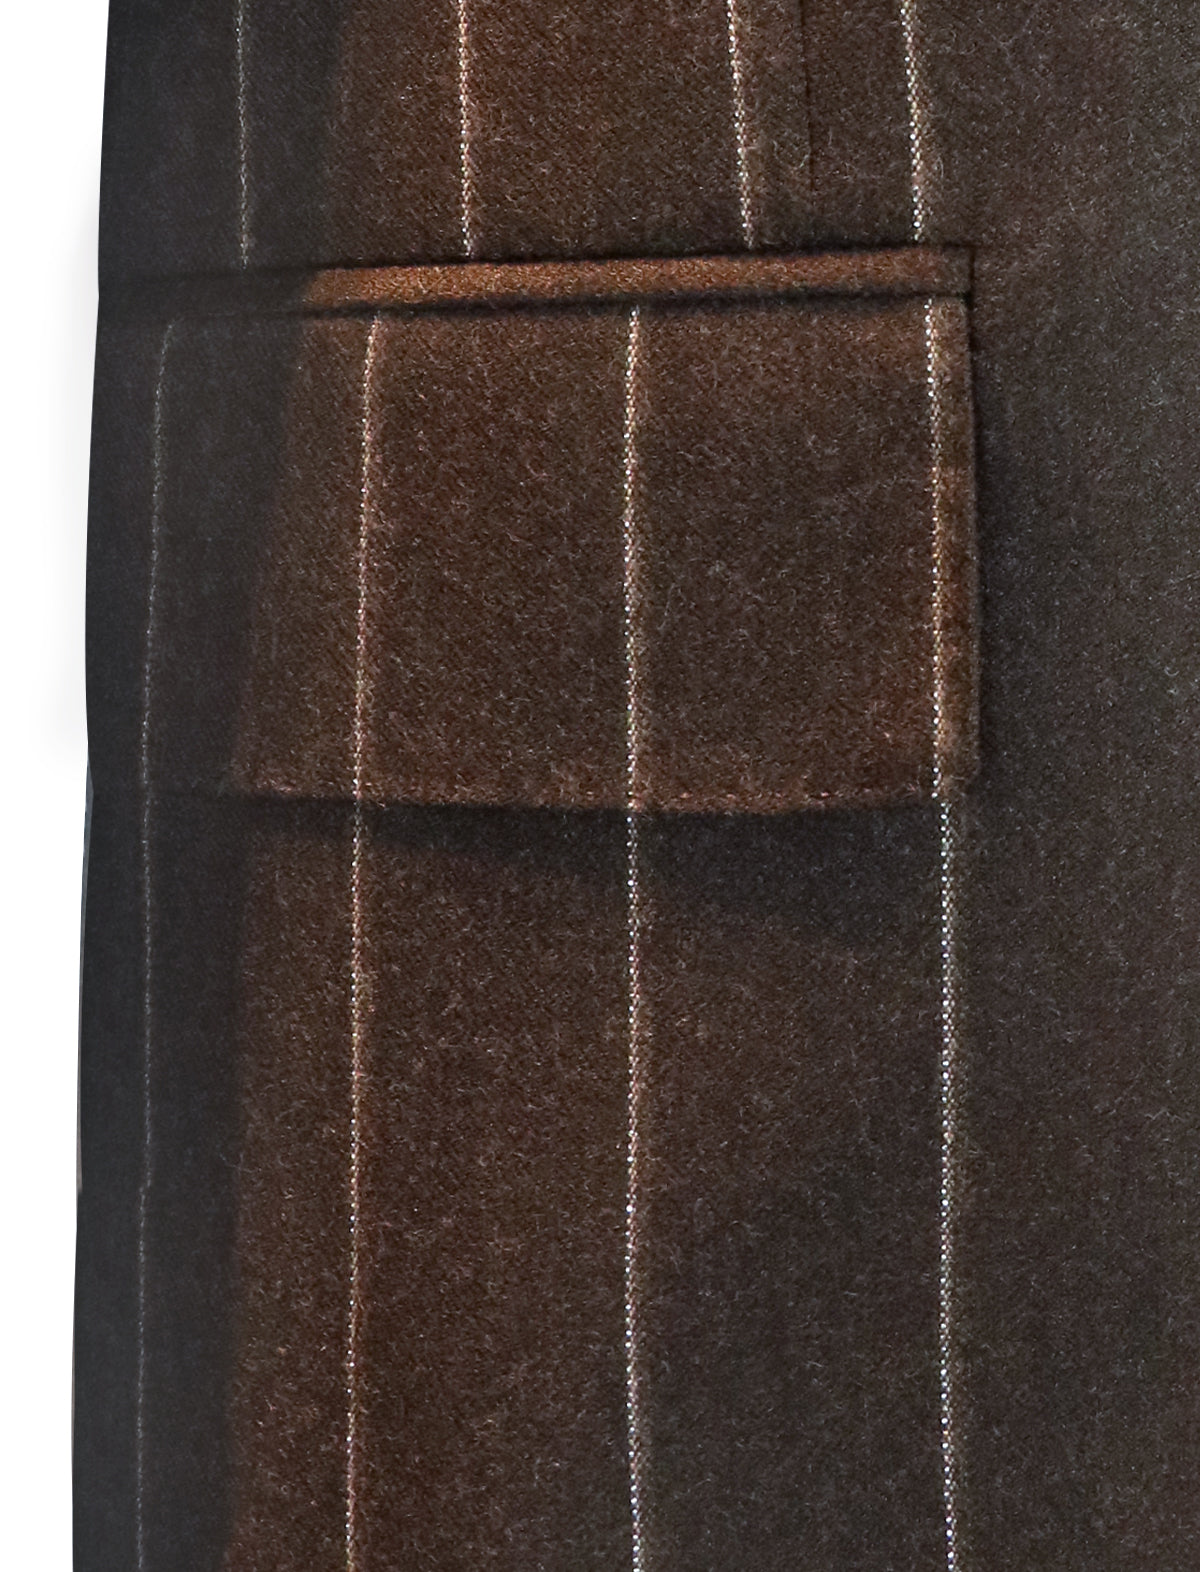 GABRIELE PASINI 2-Piece Milano Suit in Brown & Silver Stripes